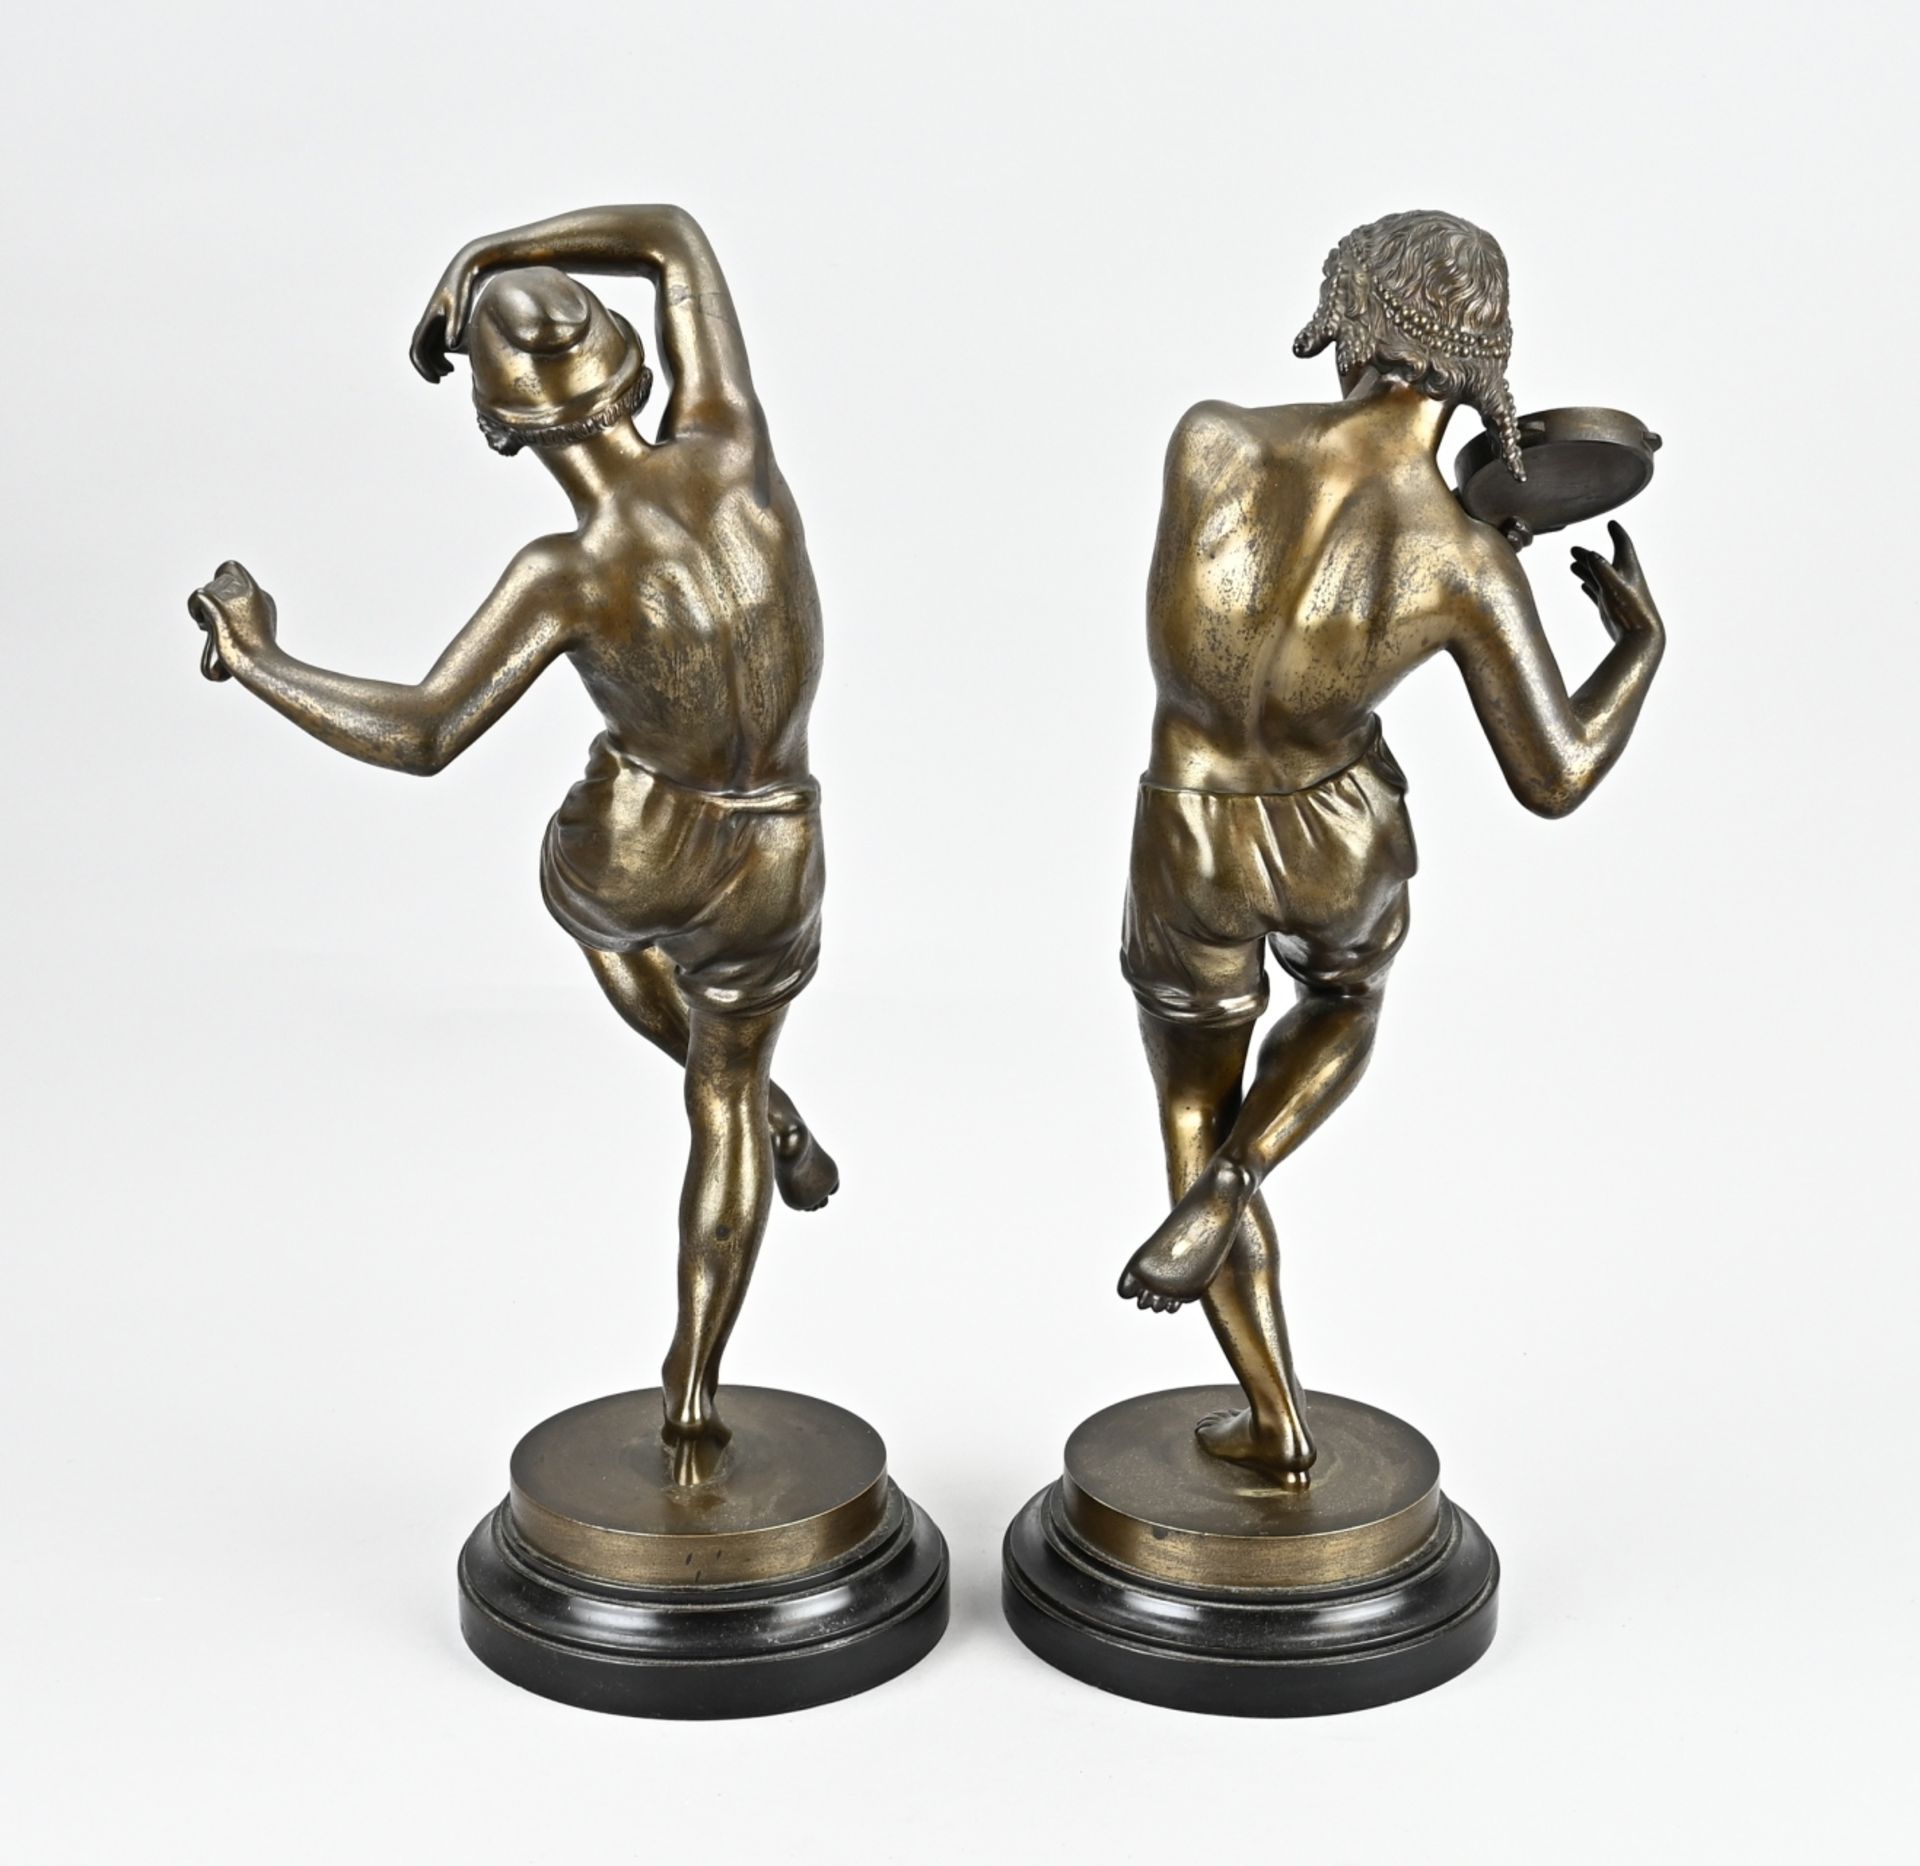 Pair of bronze statues, H 47 - 49 cm. - Image 2 of 2